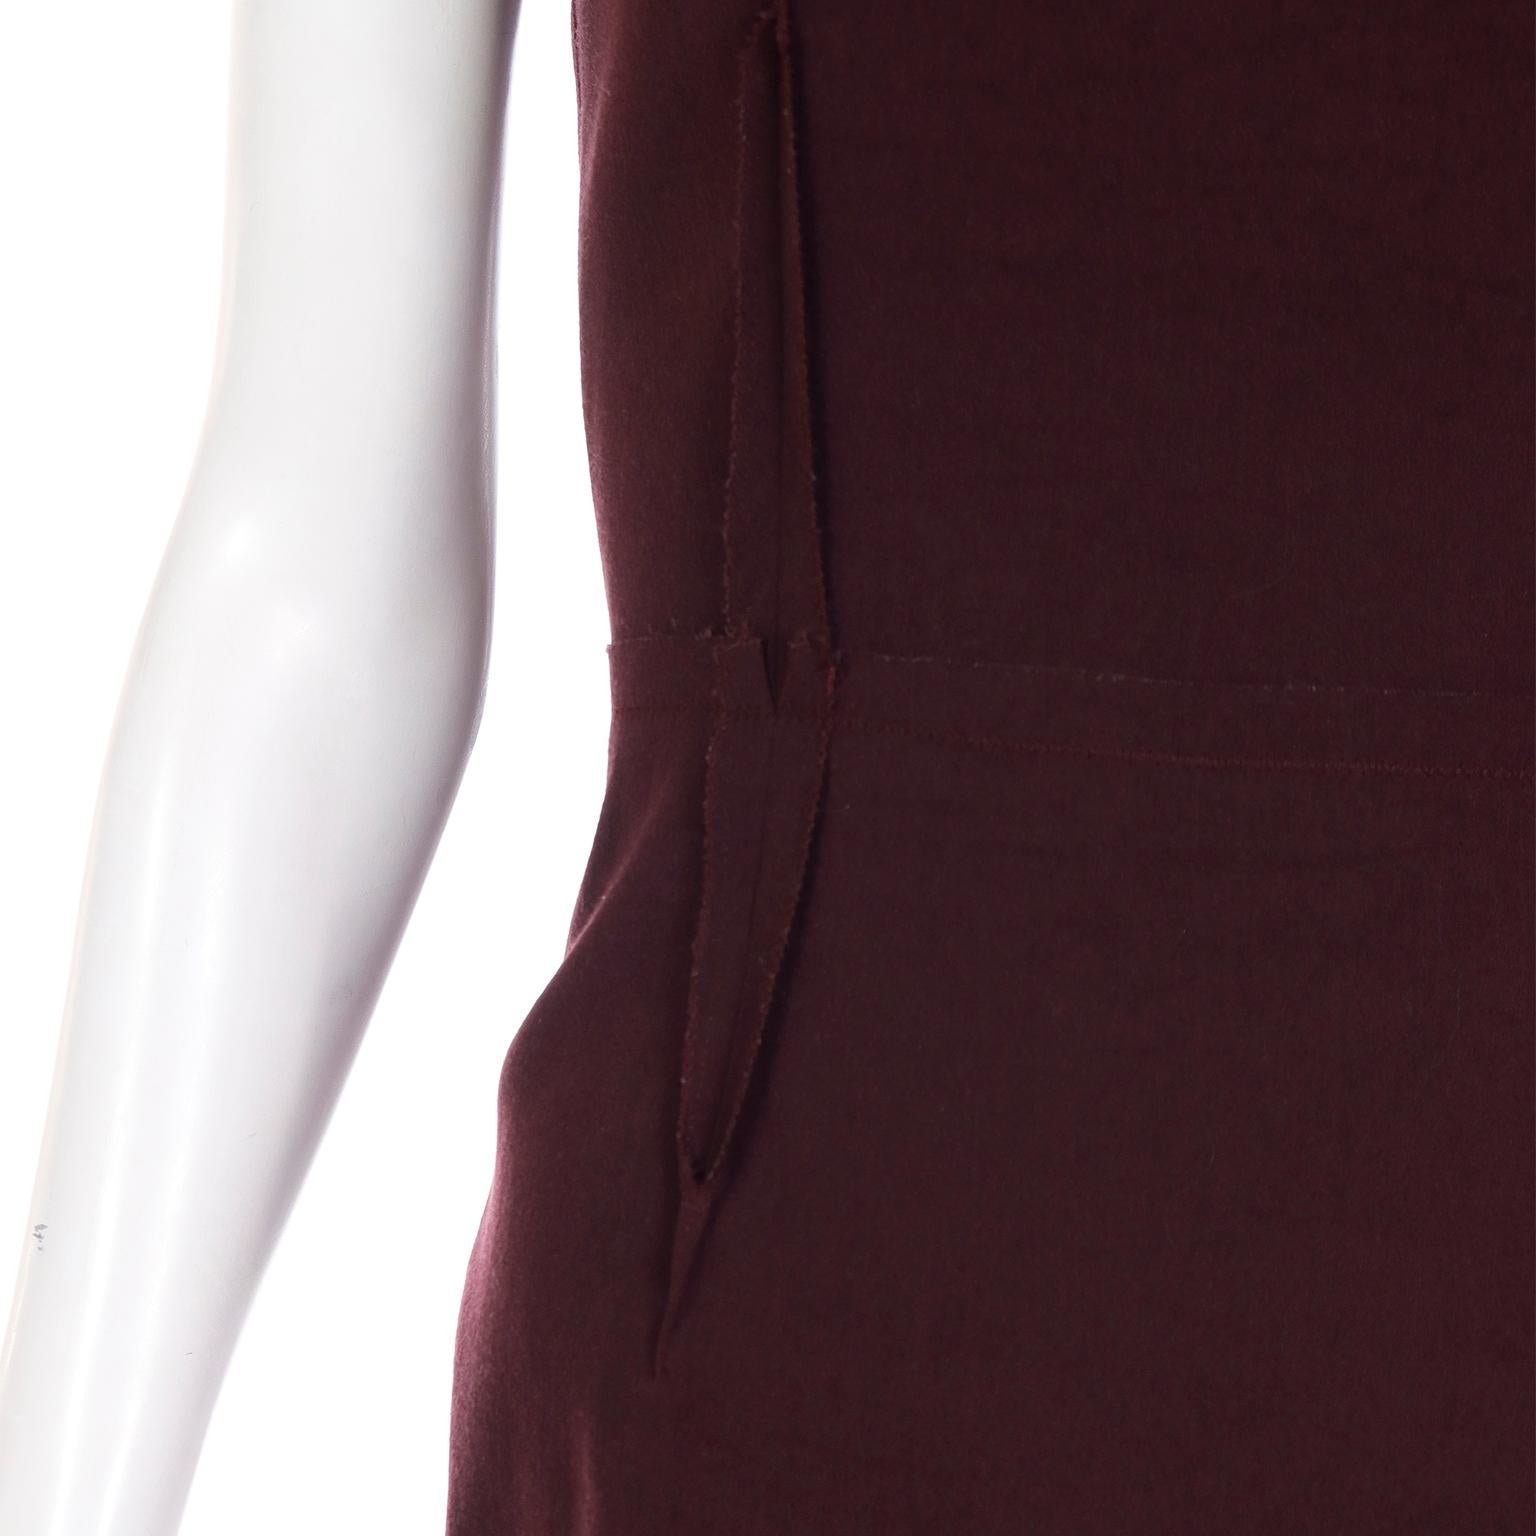 Lanvin Alber Elbaz Fall Winter 2011 Burgundy Deconstructed Short Sleeve Dress For Sale 3